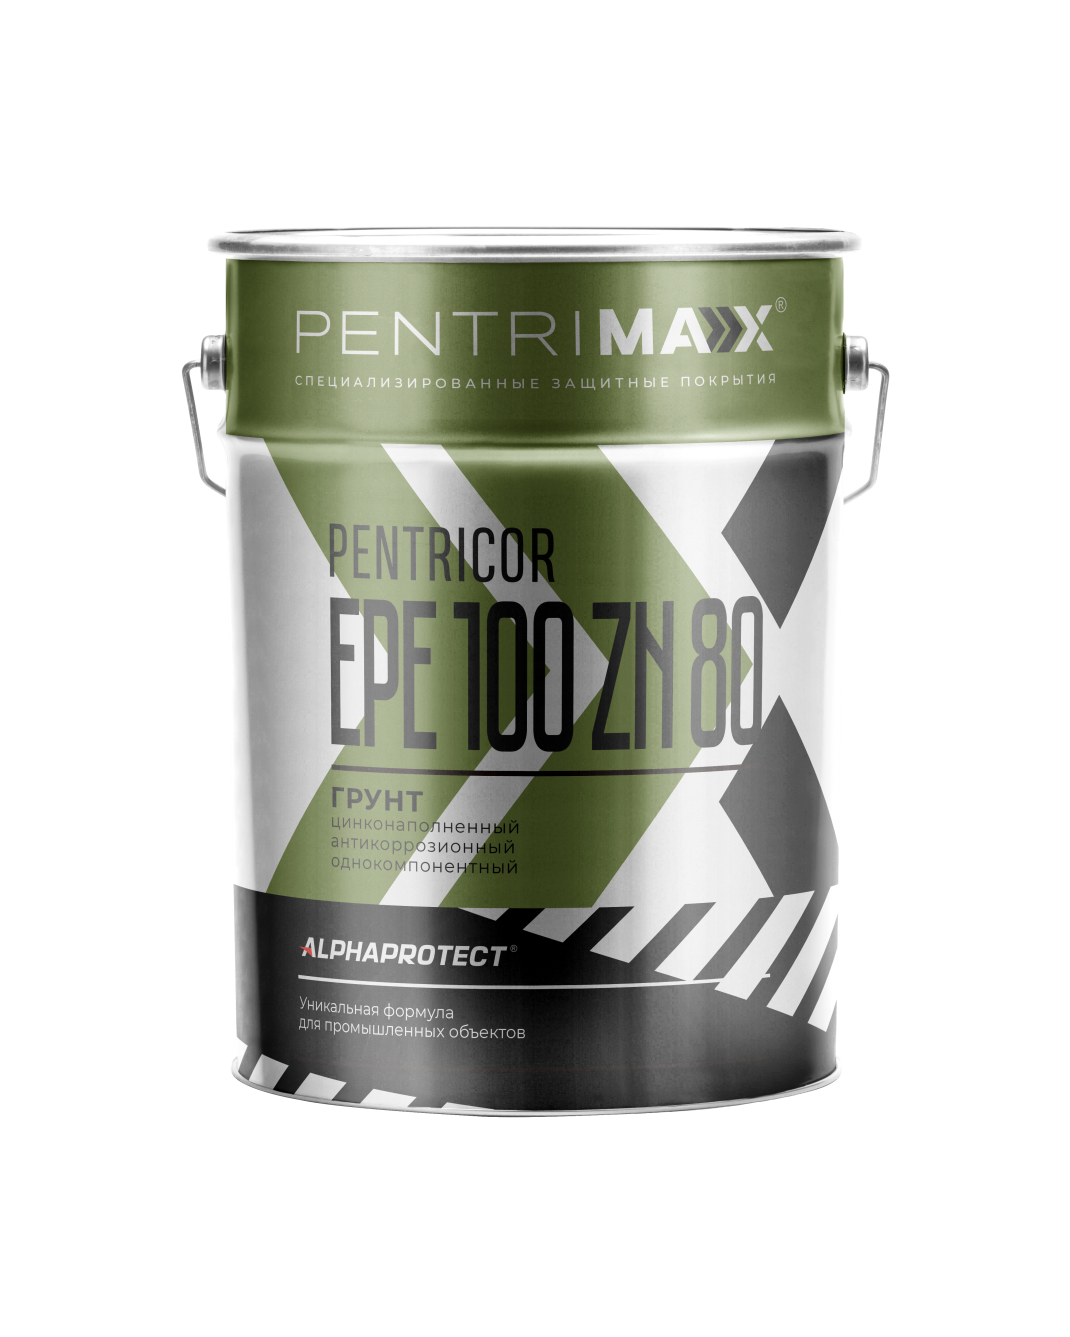 Эпоксидный грунт быстросохнущий PENTRICOR EPE 100 Zn 80